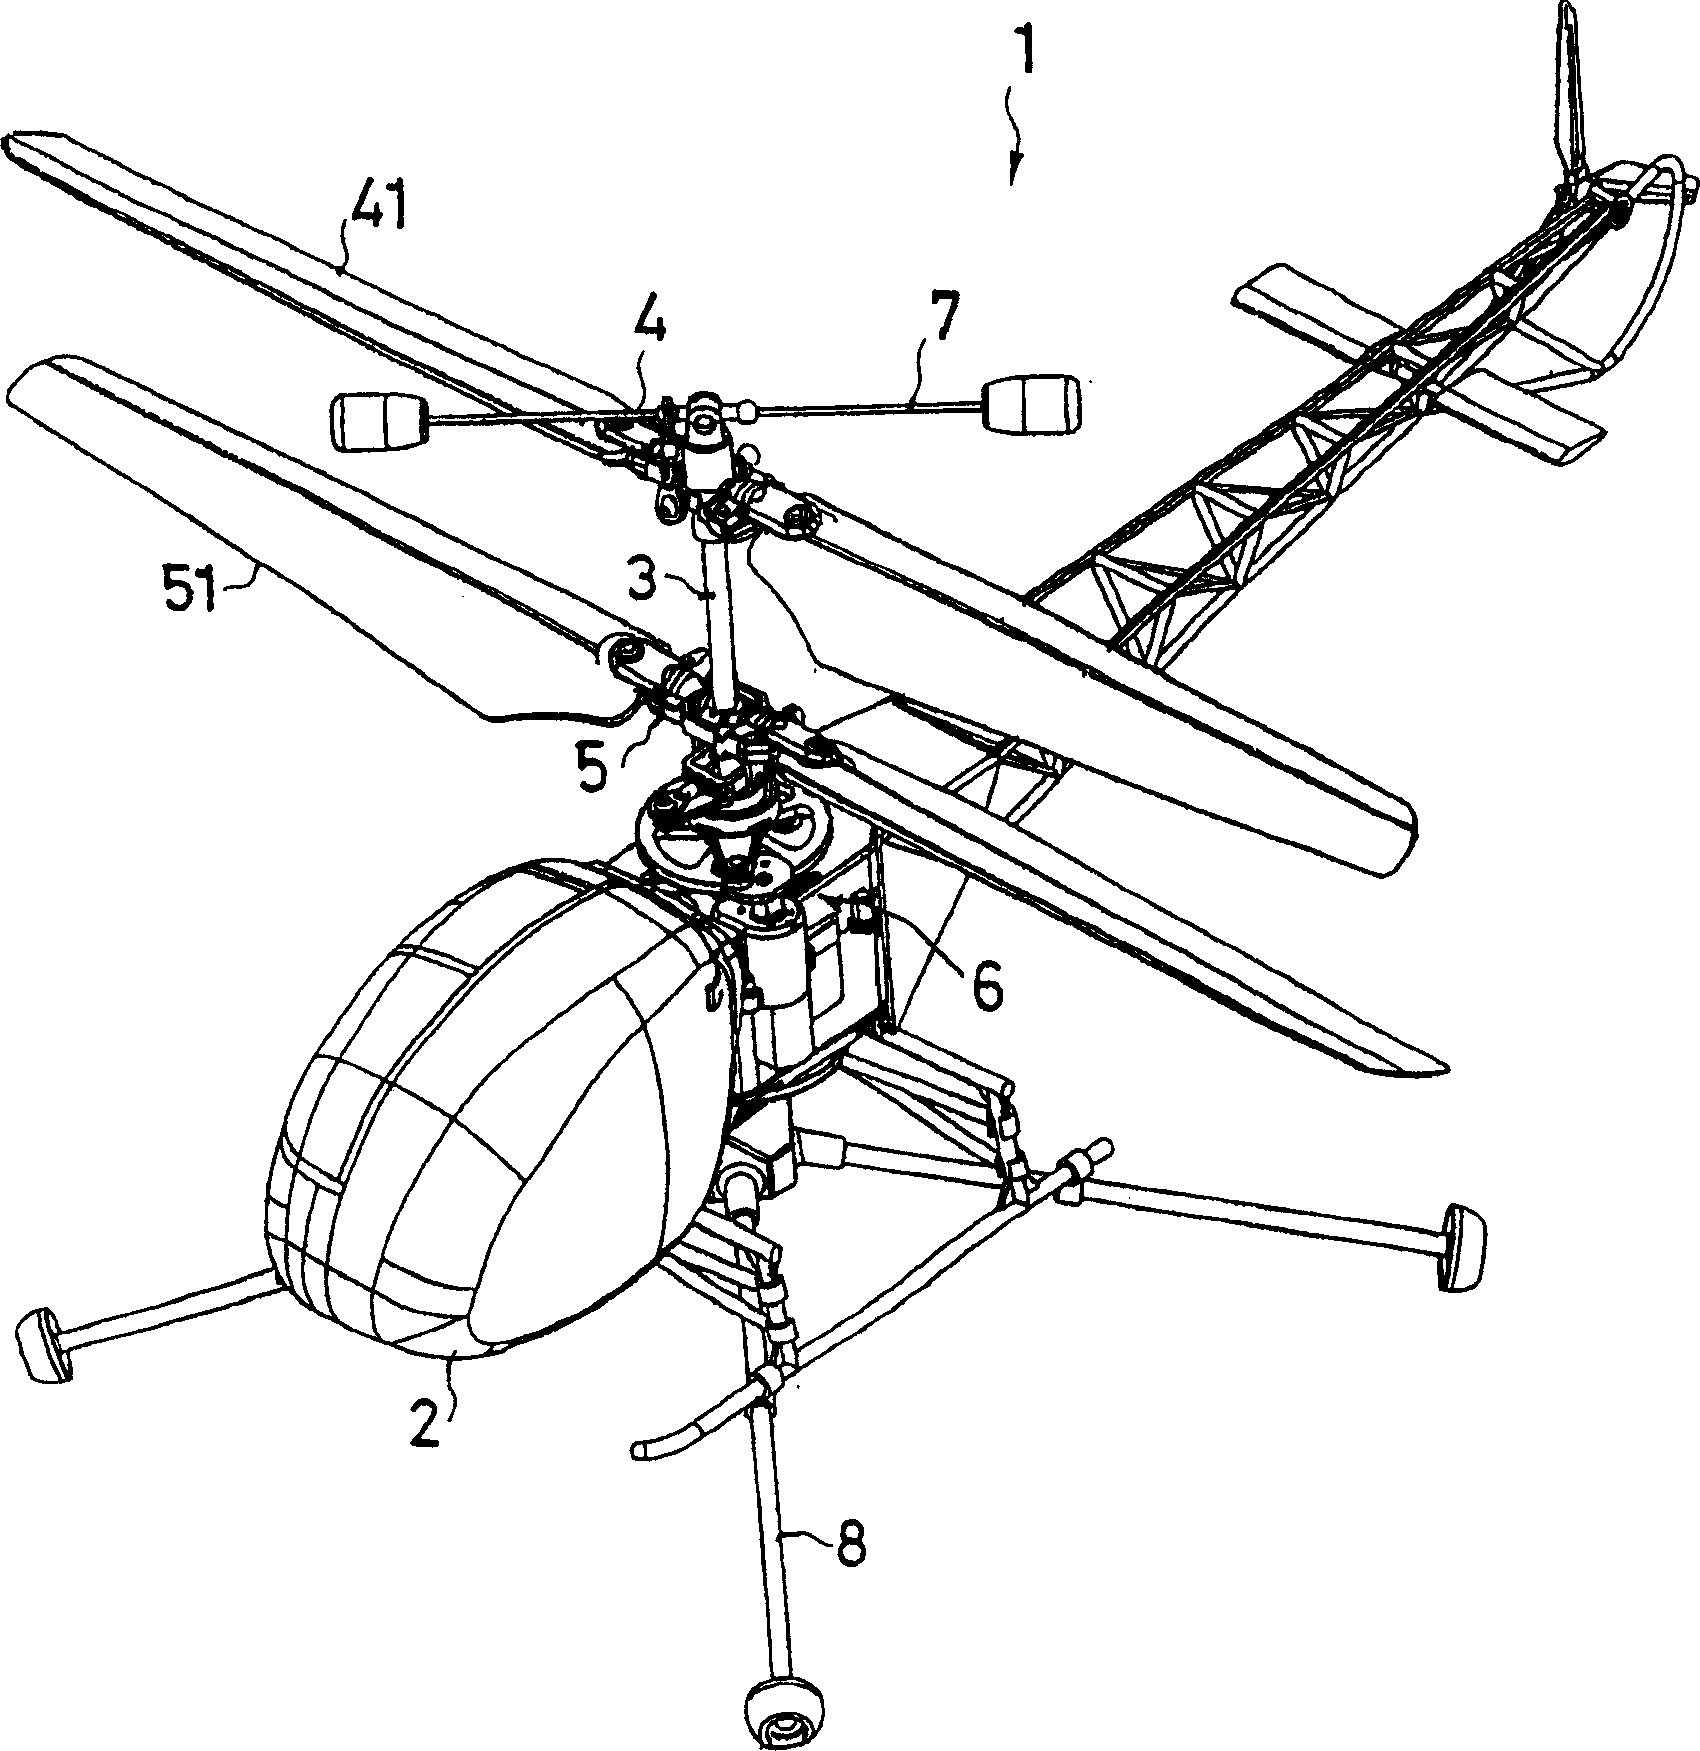 Coaxile reverse rotating type radio controlled vertiplane